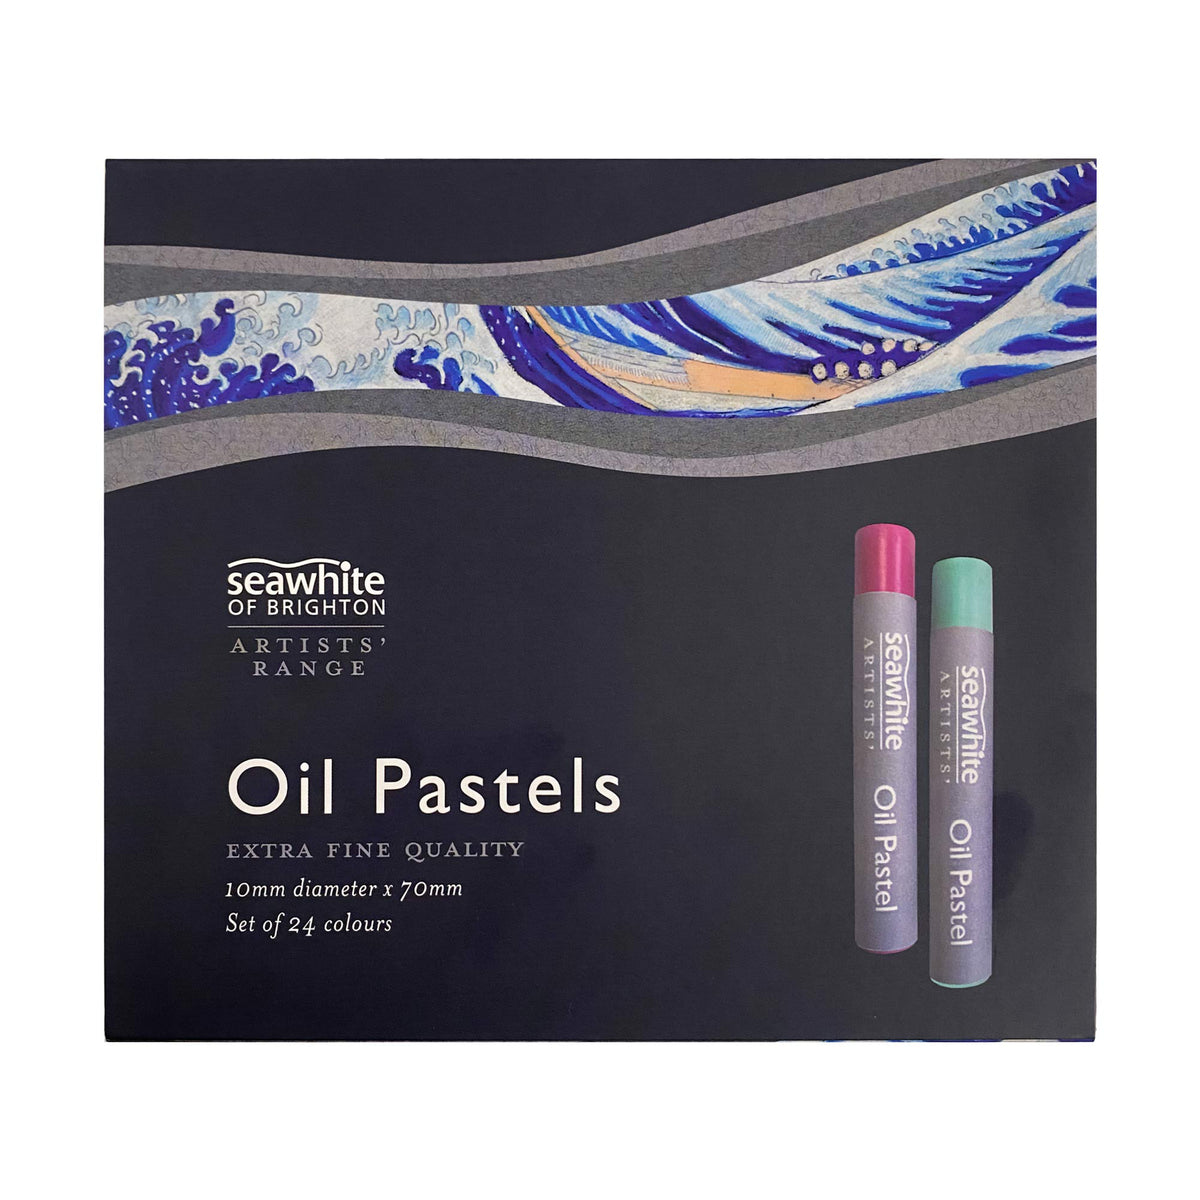 Seawhite Oil Pastels - Artists&#39; Range - Set of 24 Colours - Box